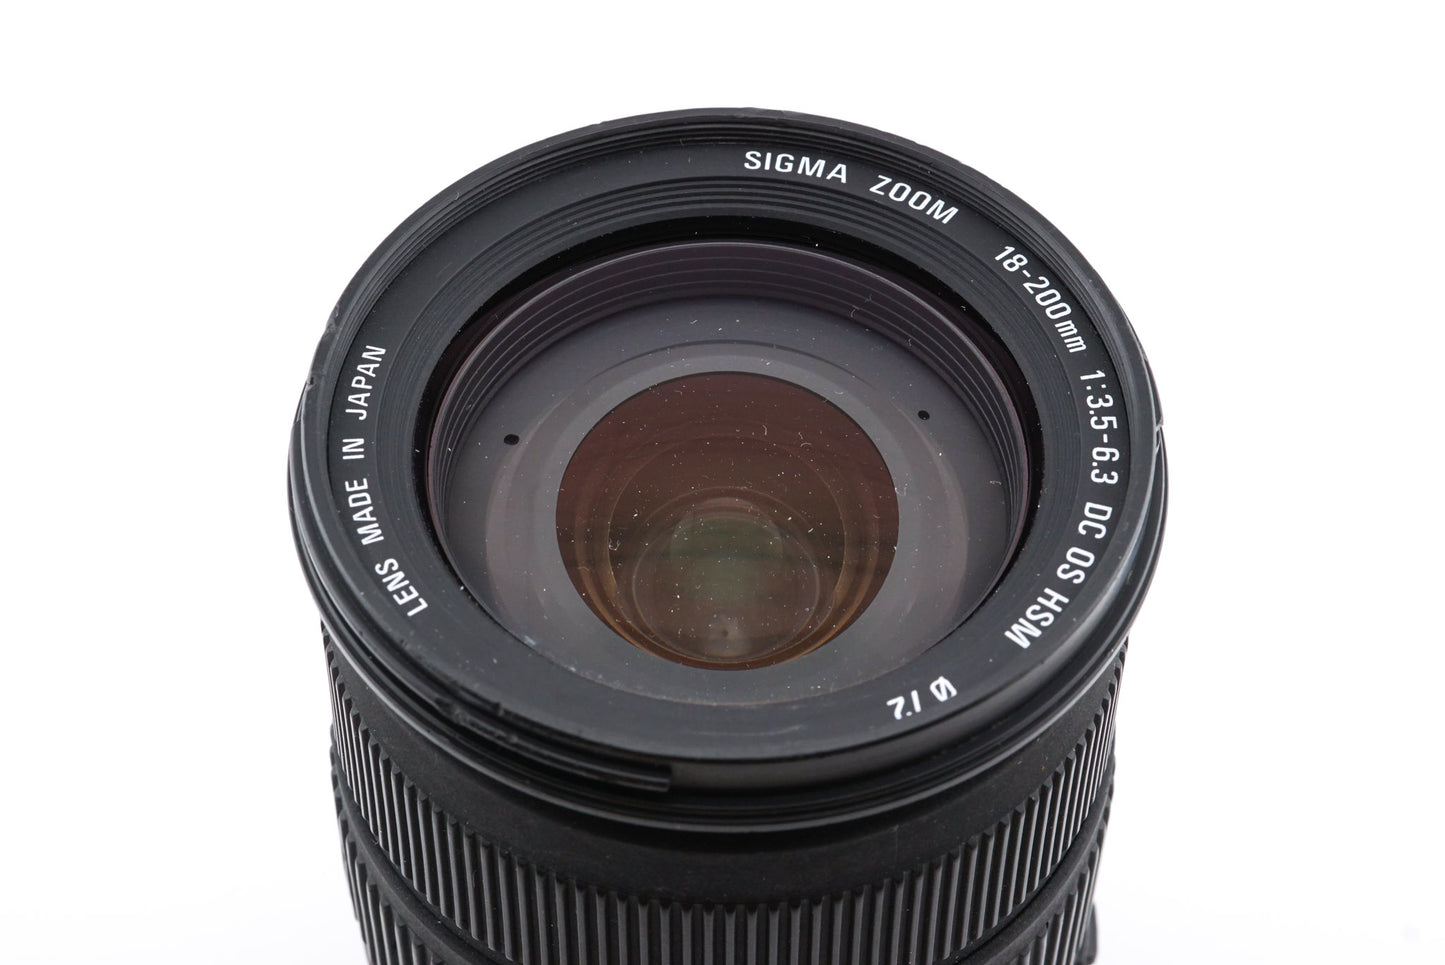 Sigma 18-200mm f3.5-6.3 DC OS HSM